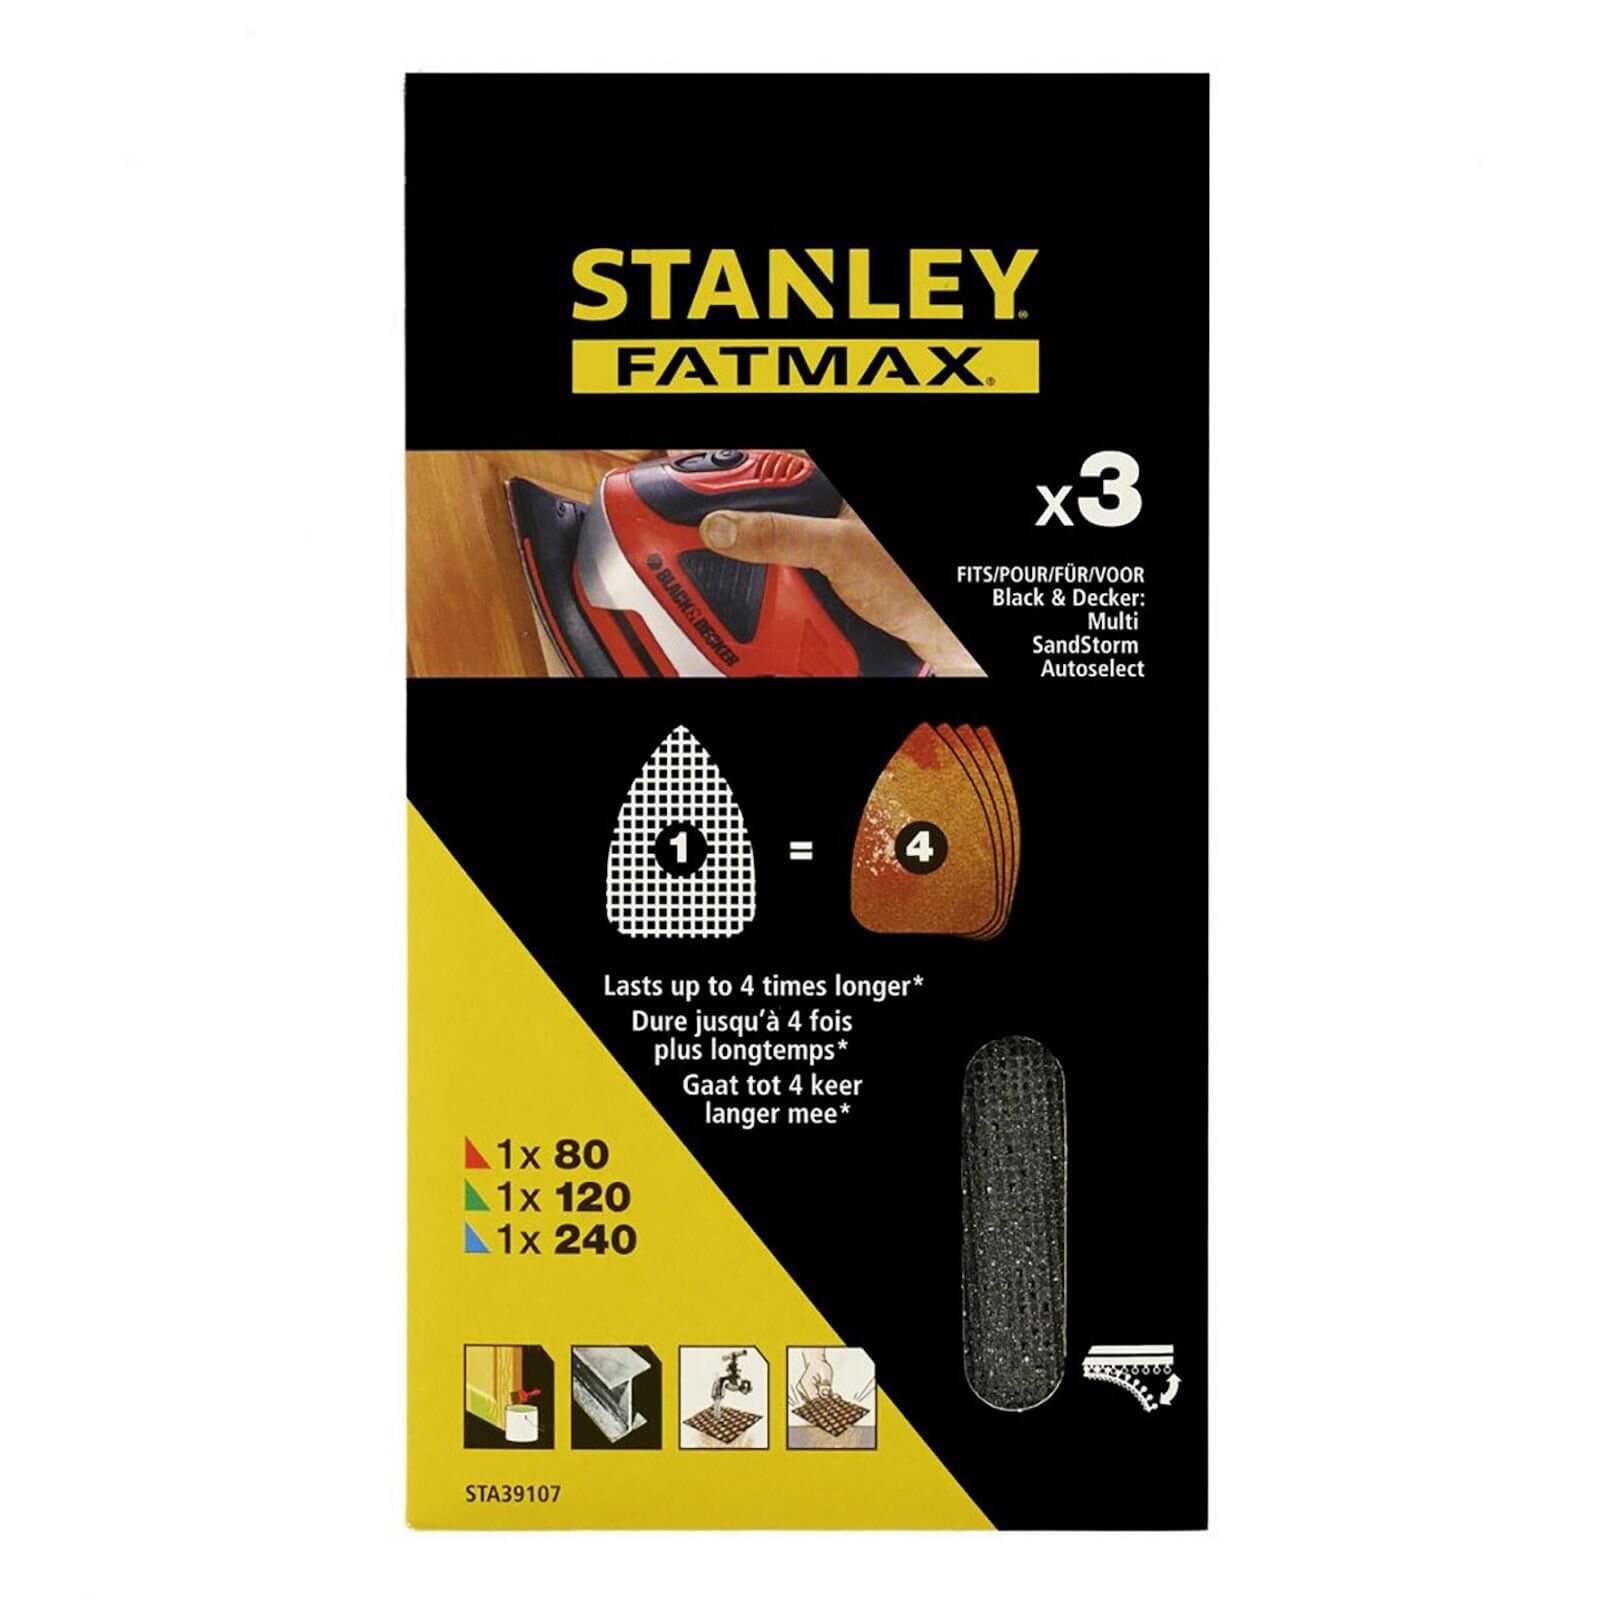 Photo of Stanley Fatmax Multisander Sheet Mesh Mixed - Sta39107-xj